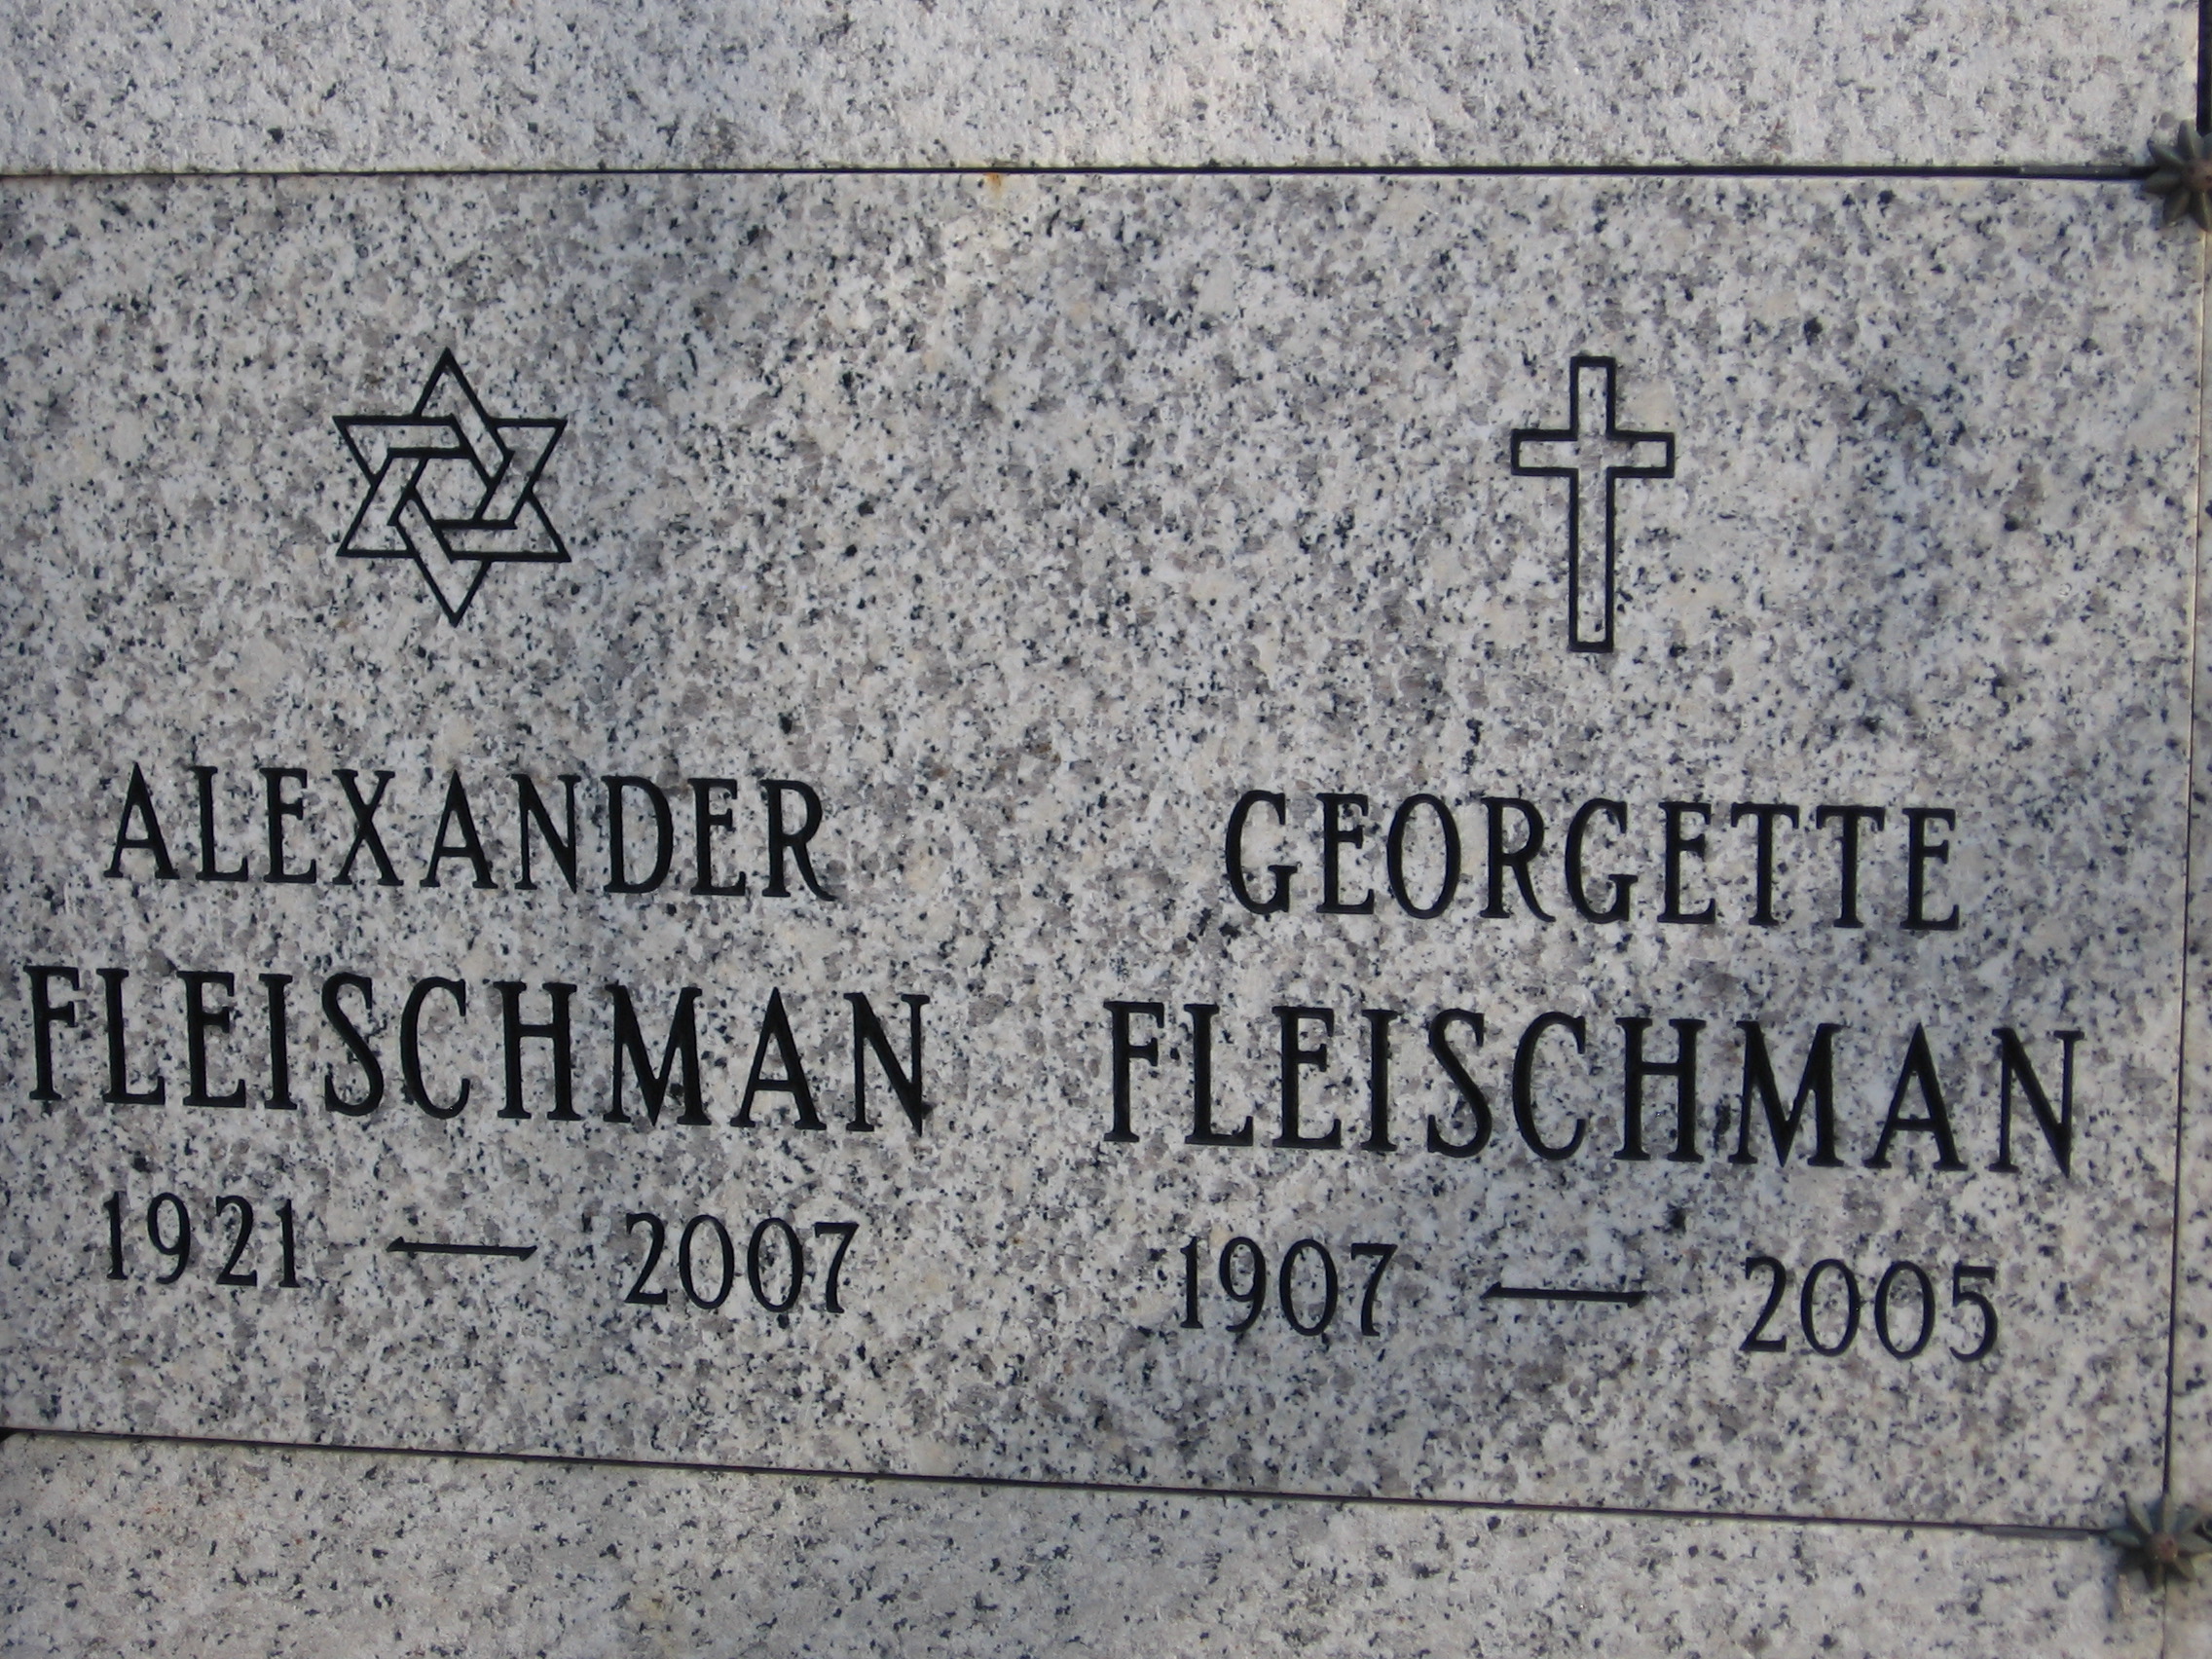 Alexander Fleischman